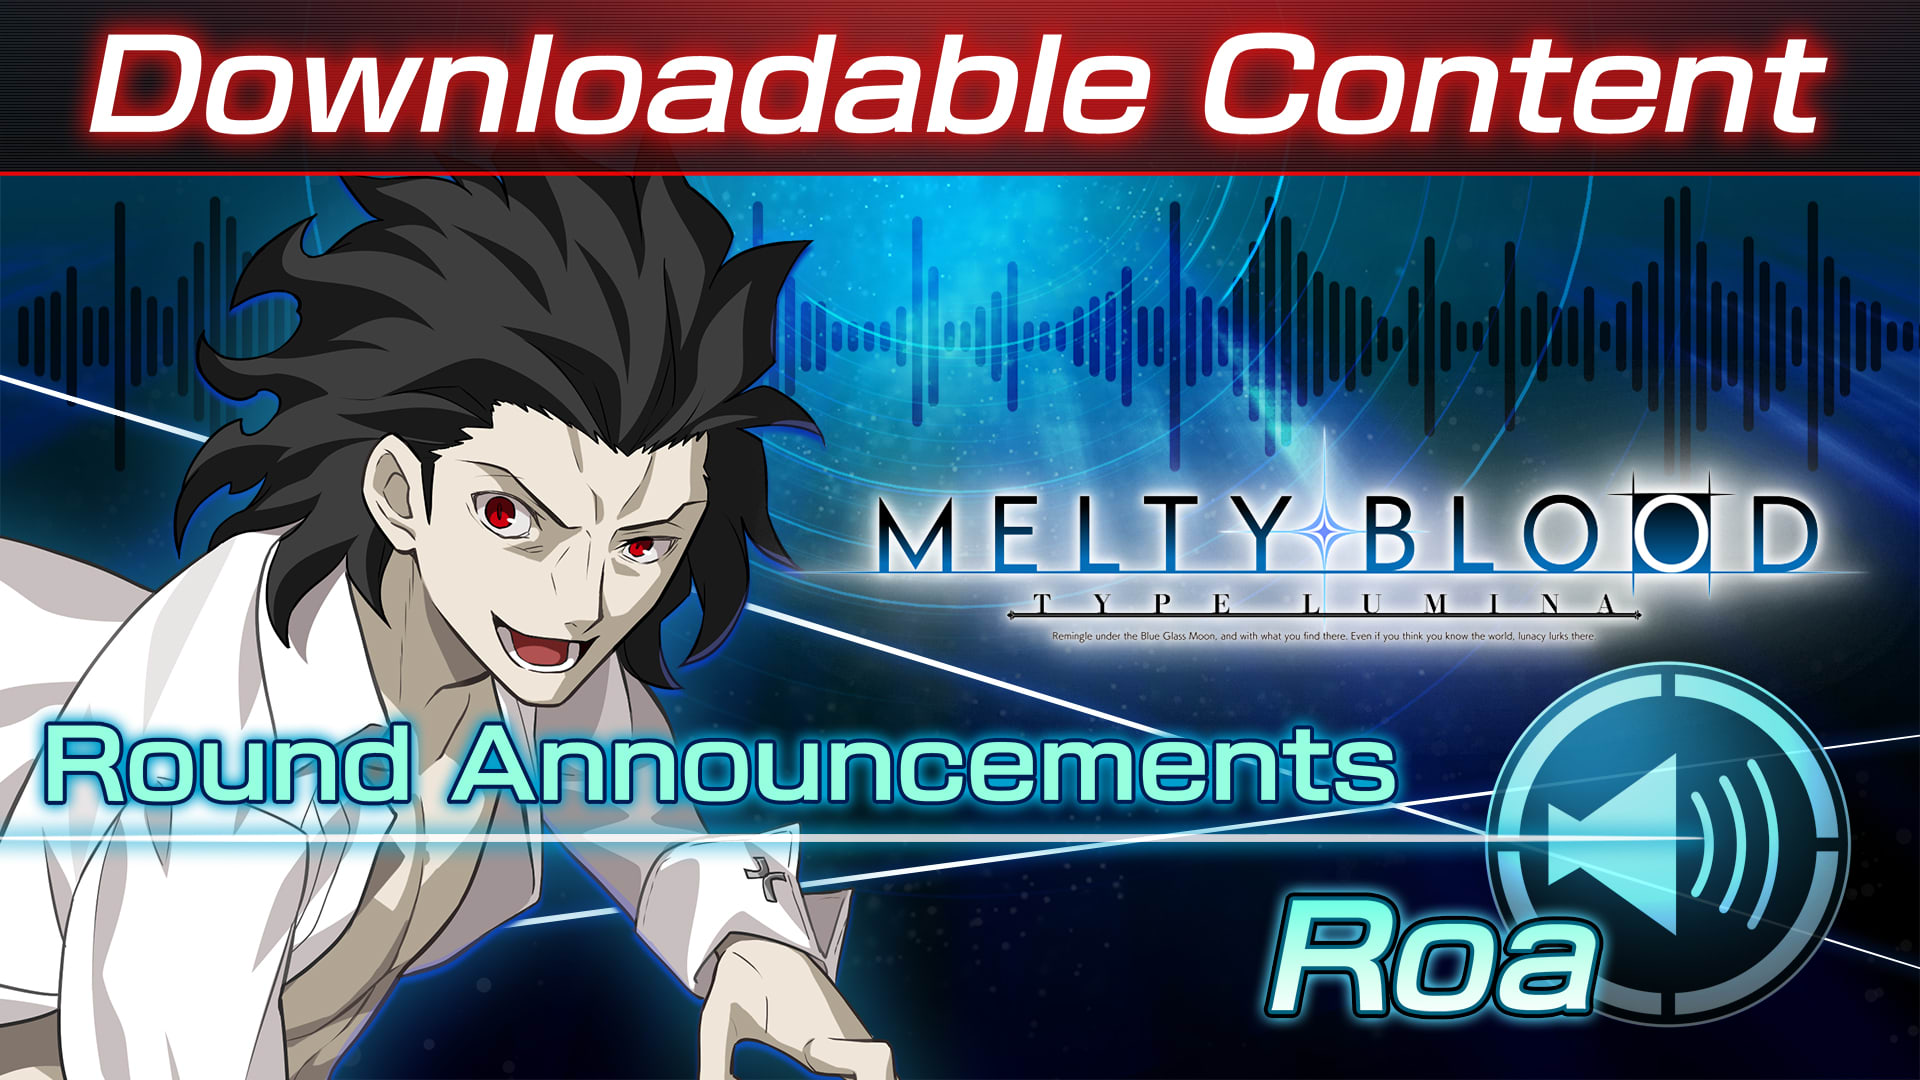 DLC: Roa Round Announcements